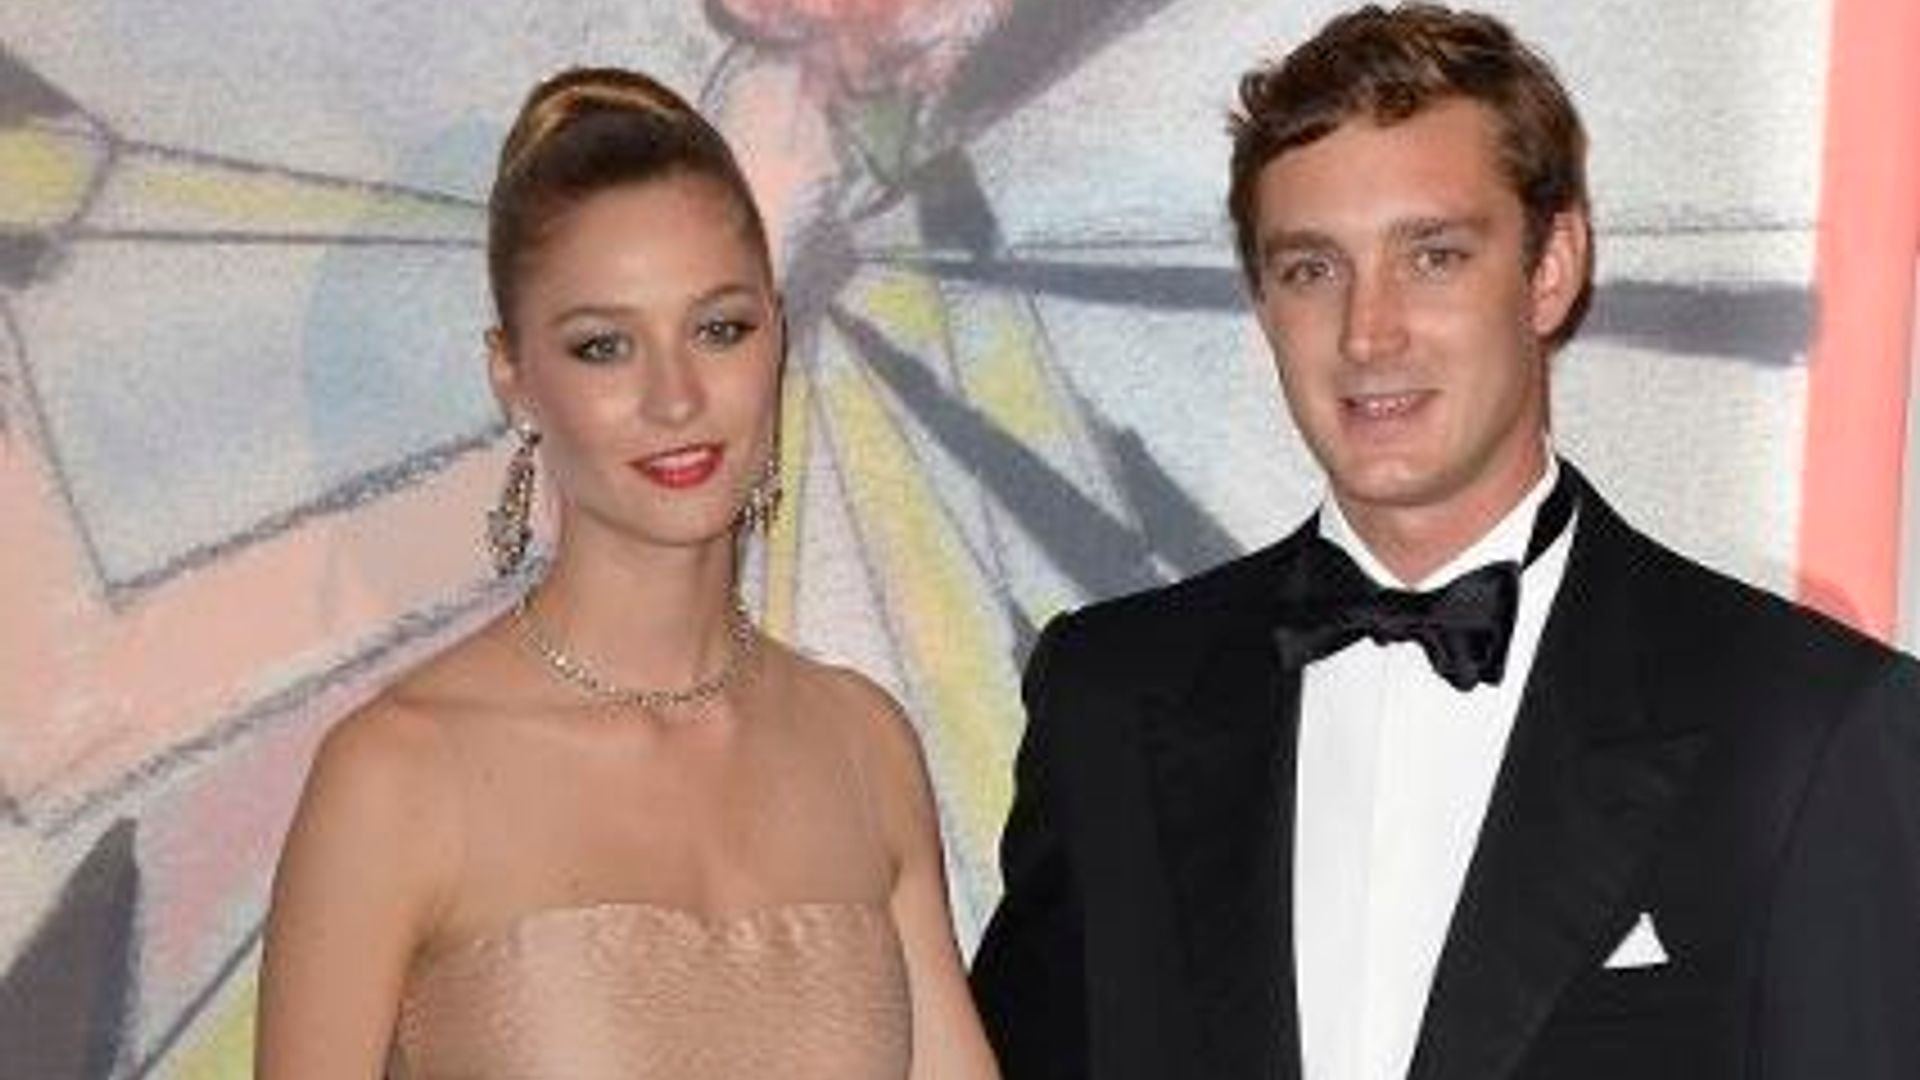 Monaco's Pierre Casiraghi set to wed Beatrice Borromeo in 2015